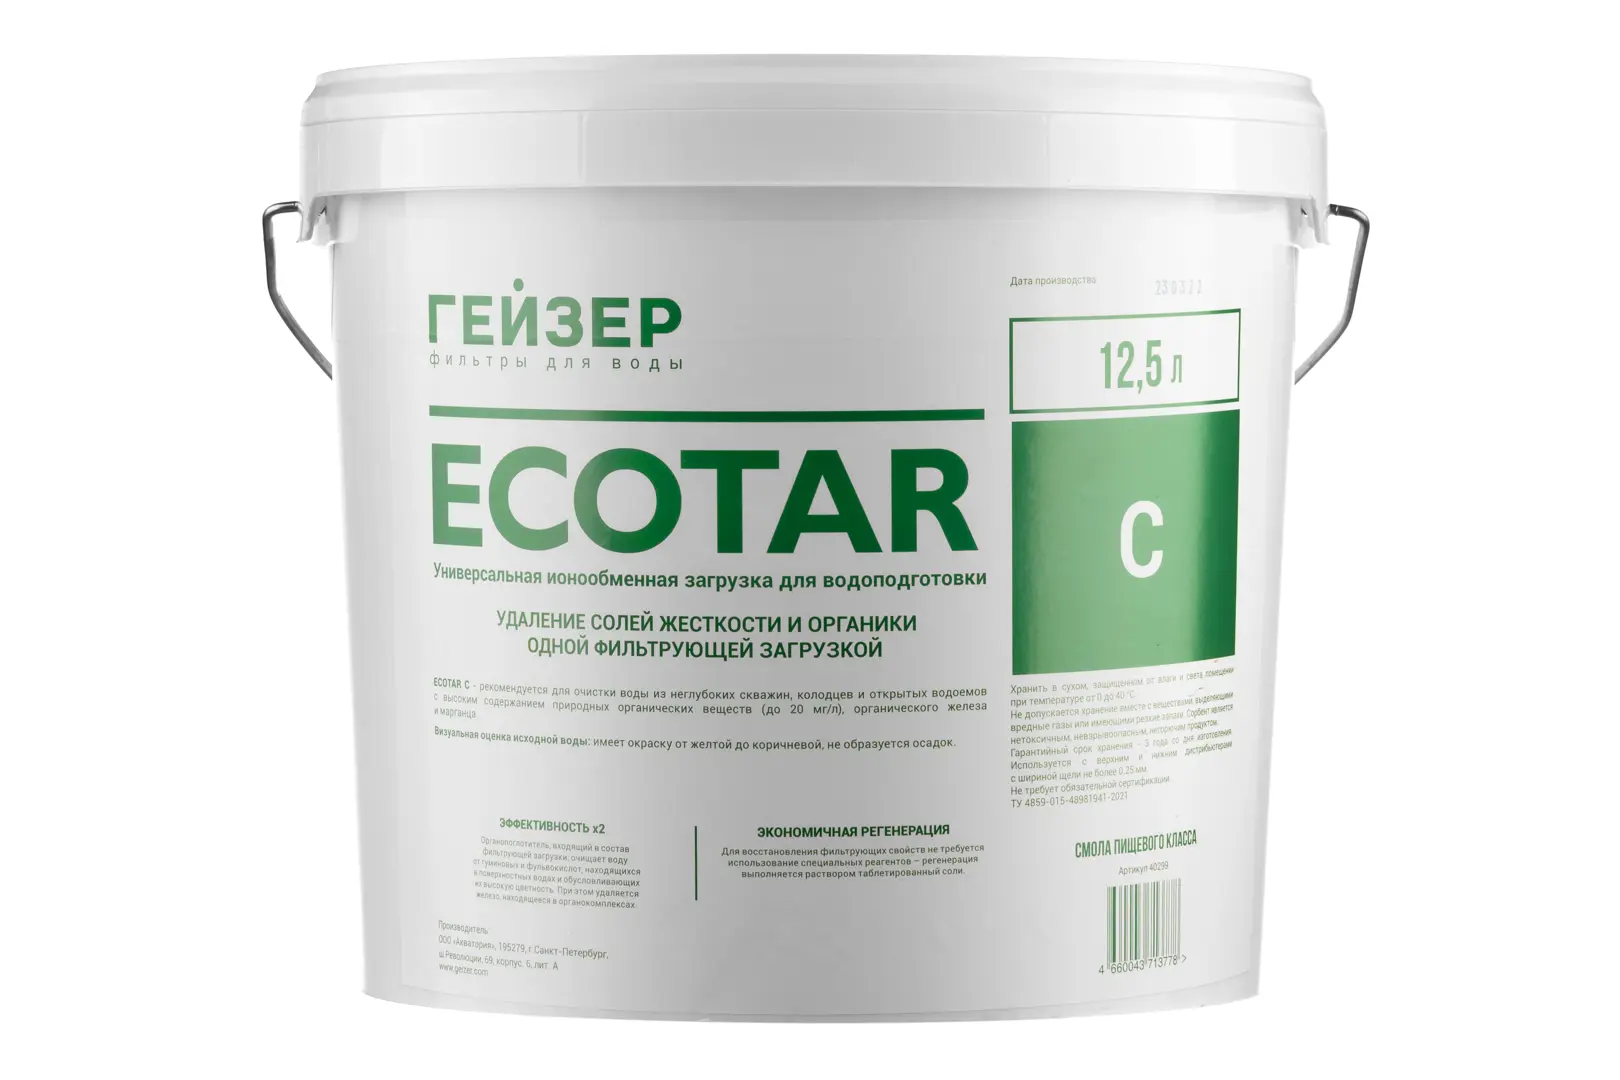 Засыпка Ecotar С для Гейзер ведро 12.5 л сменная засыпка гейзер аквасофт 35863